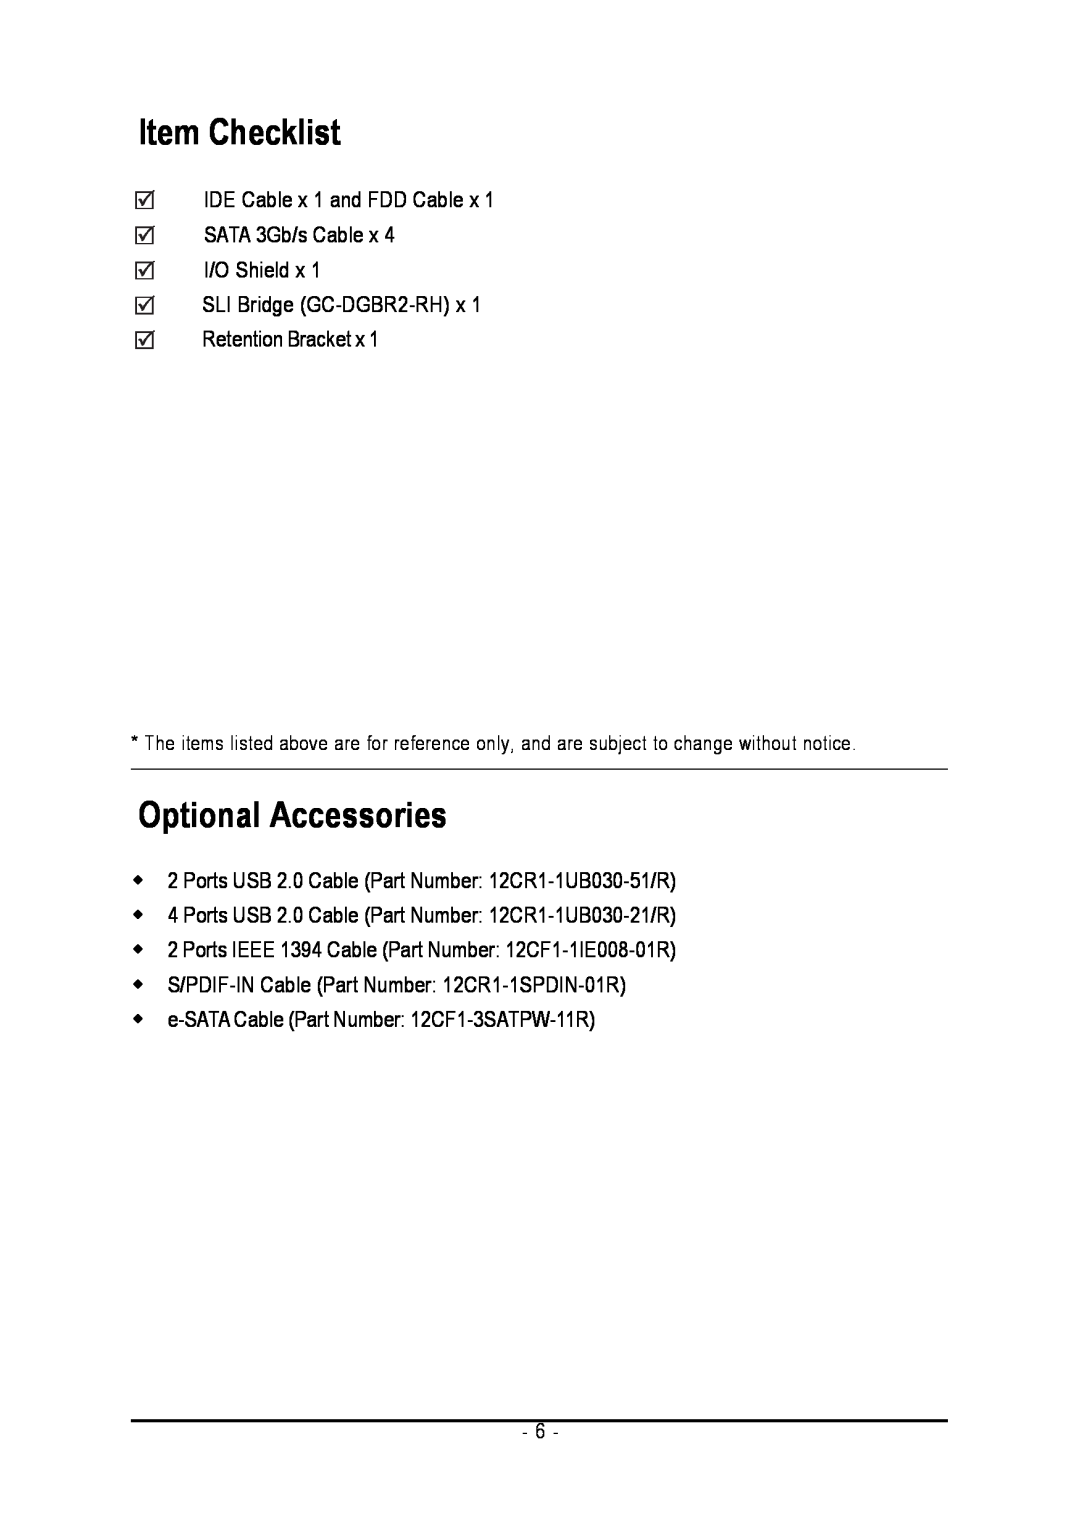 Intel GA-N650SLI-DS4 user manual Item Checklist, Optional Accessories 